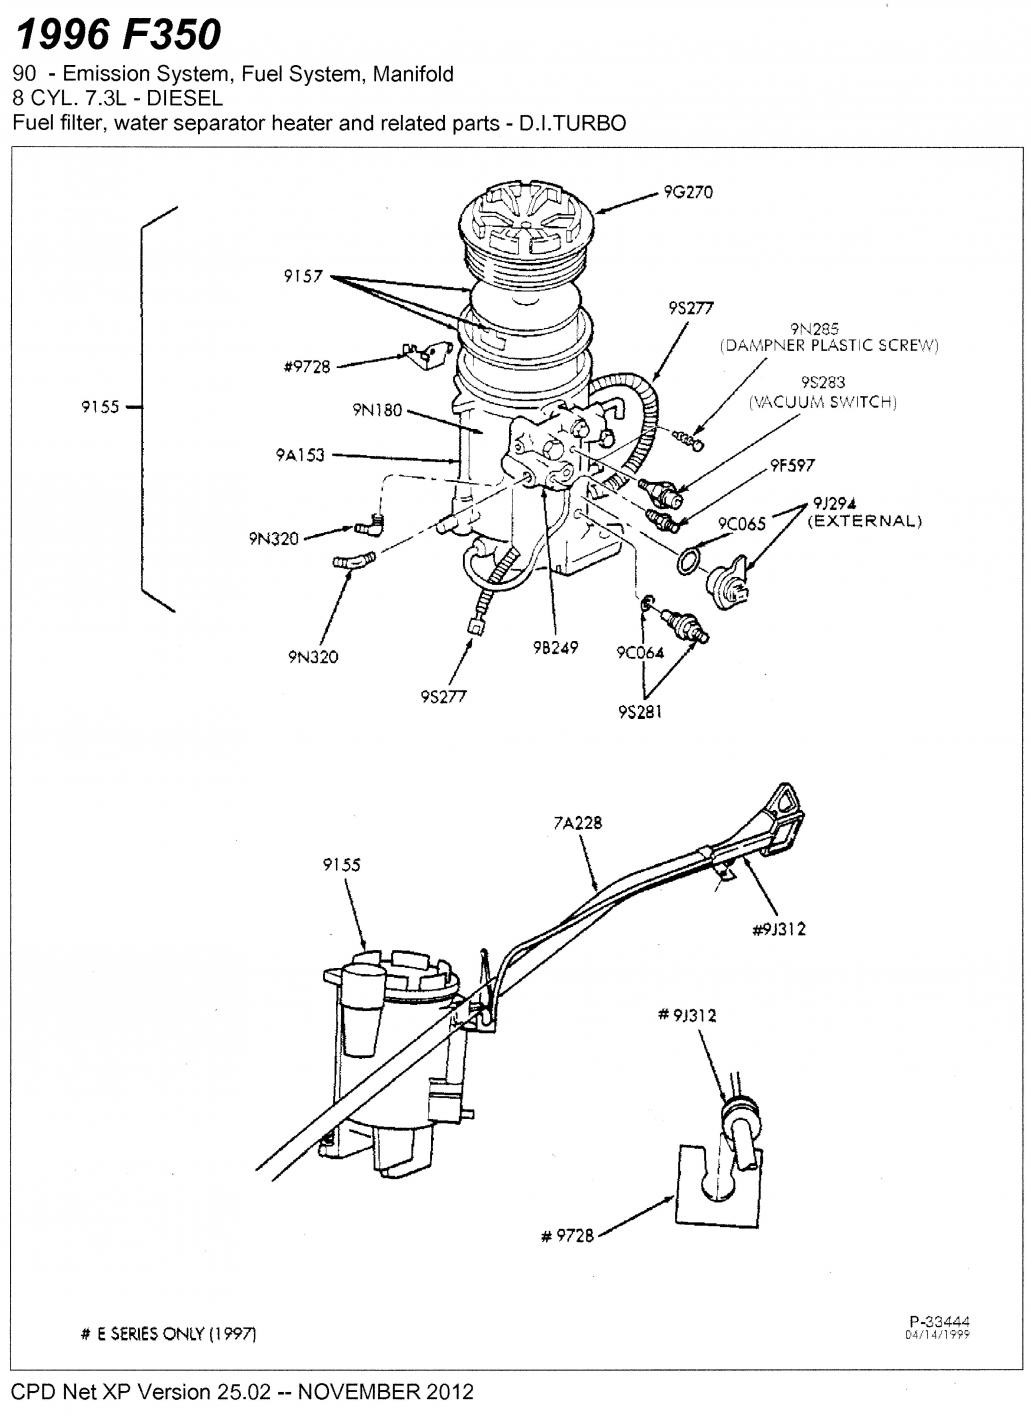 2001 ford e450 7.3l diesel engine wiring diagram transmission